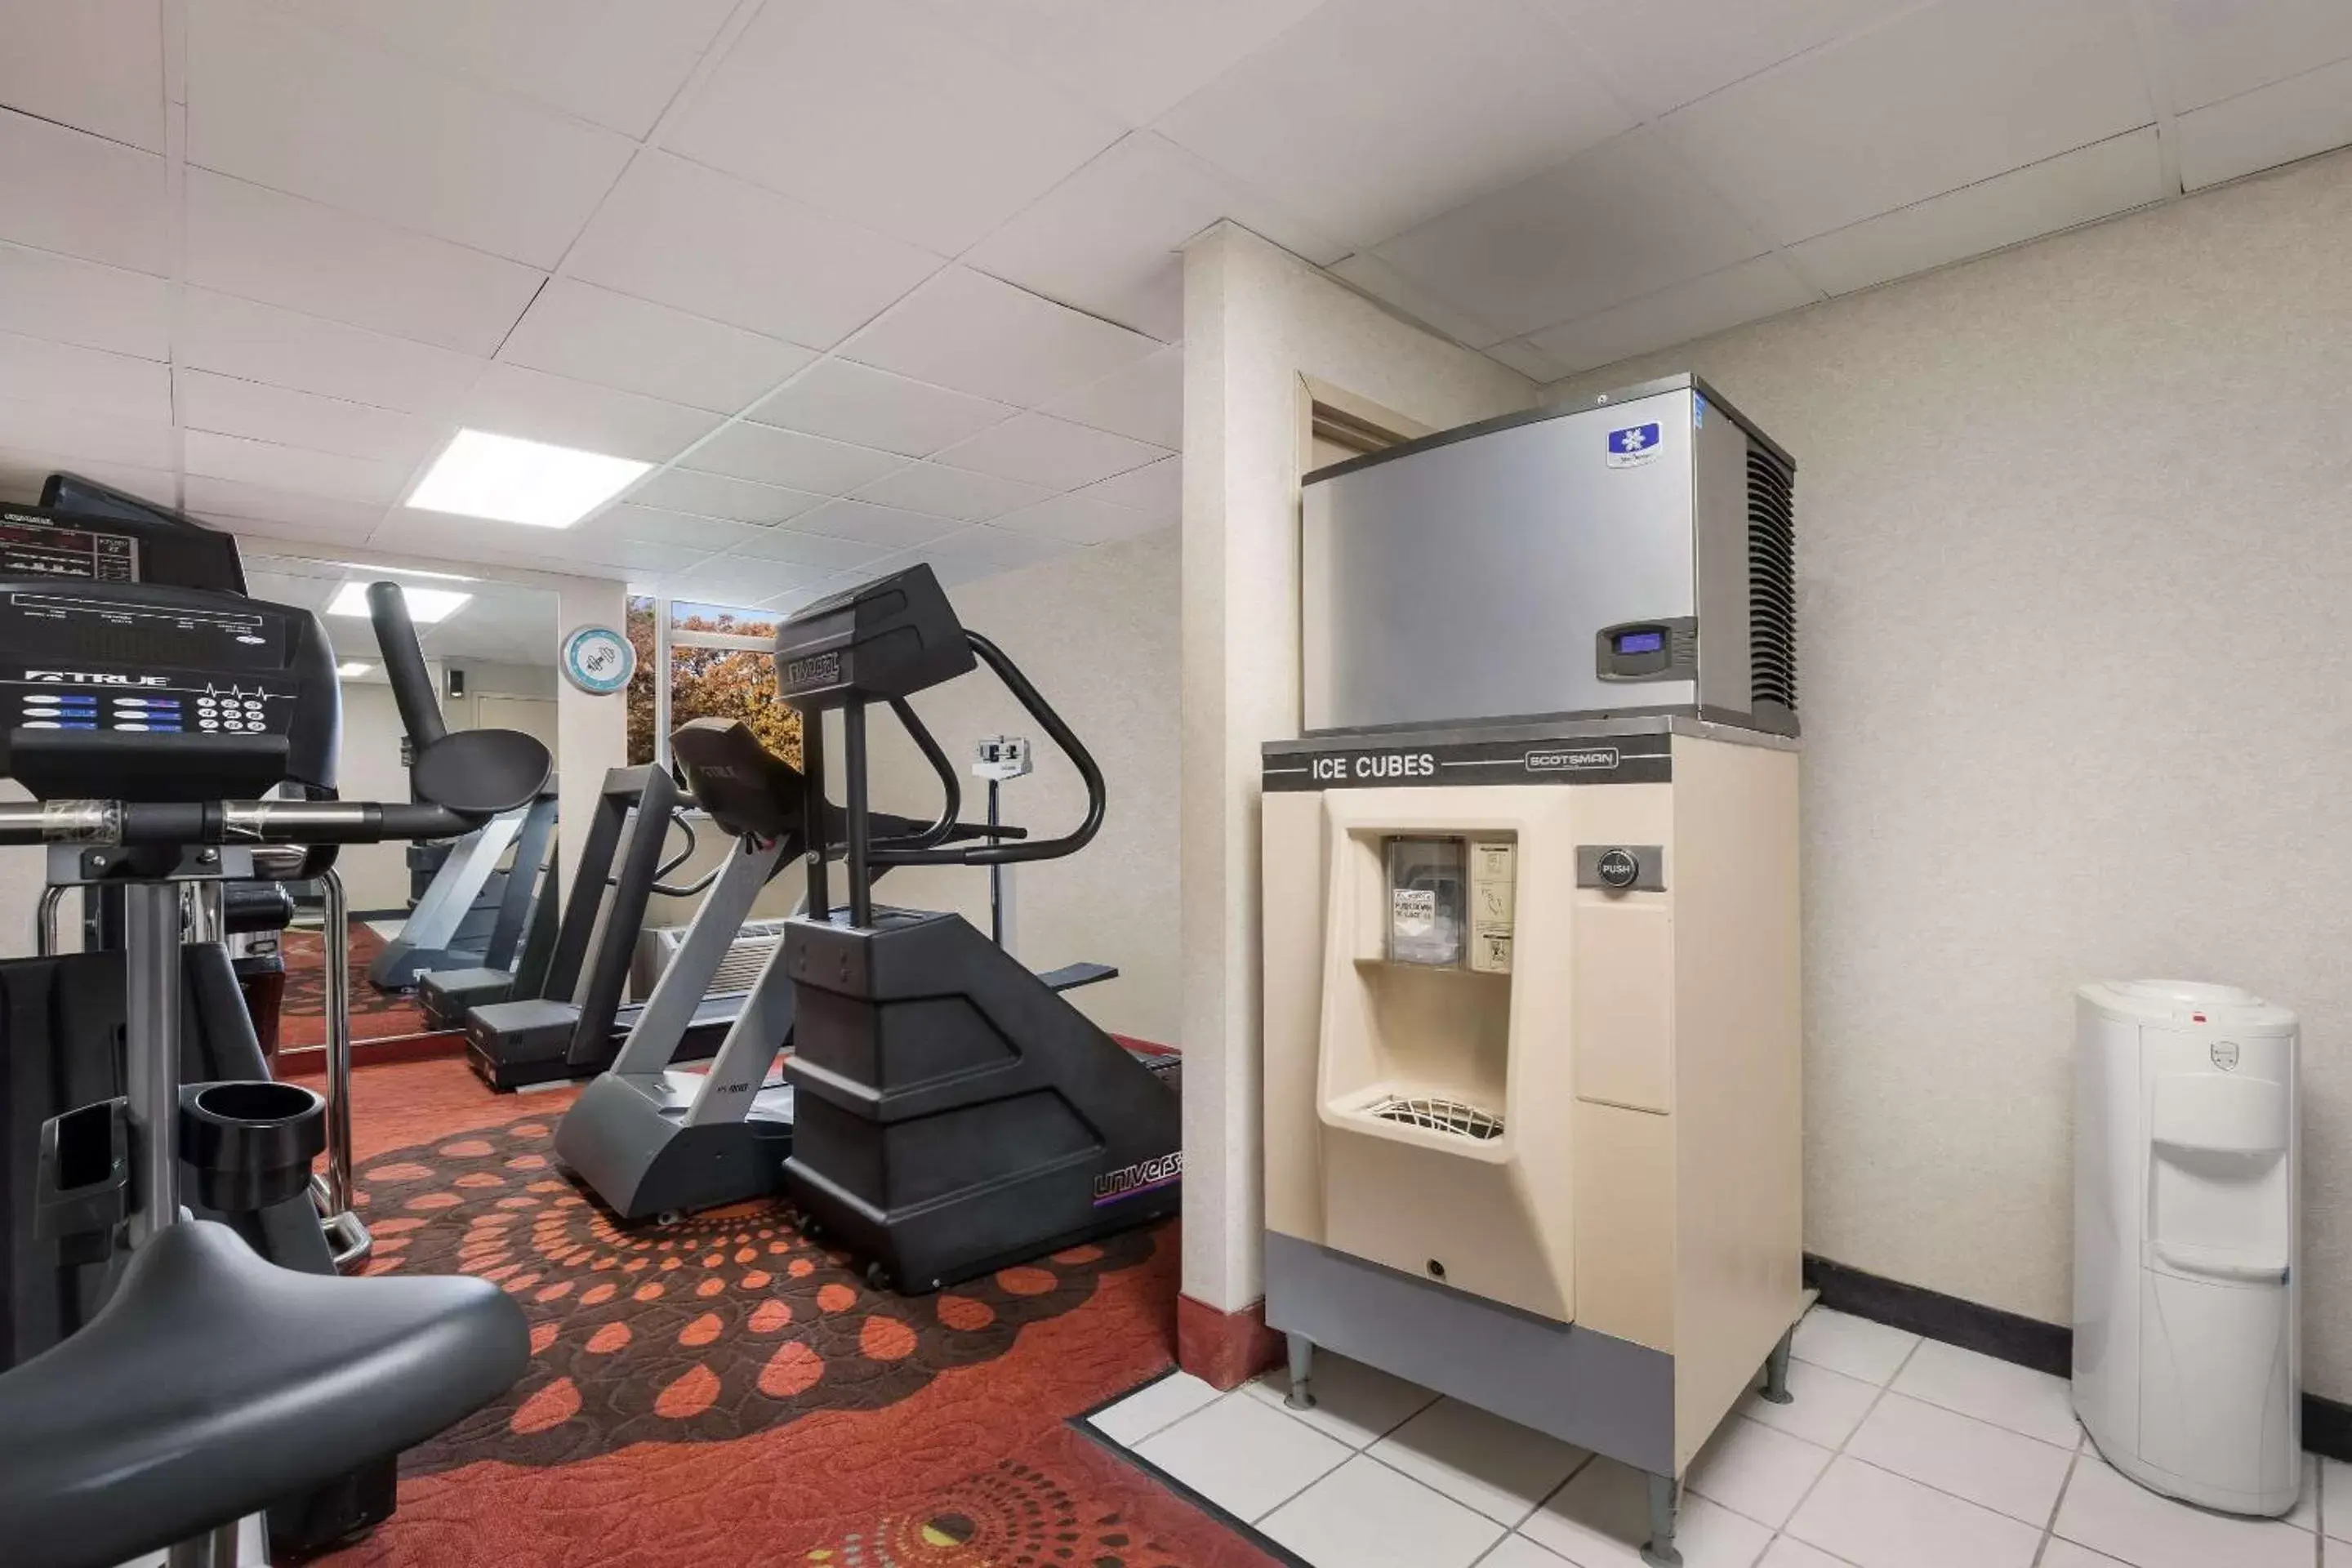 Fitness centre/facilities, Fitness Center/Facilities in Quality Inn Joliet